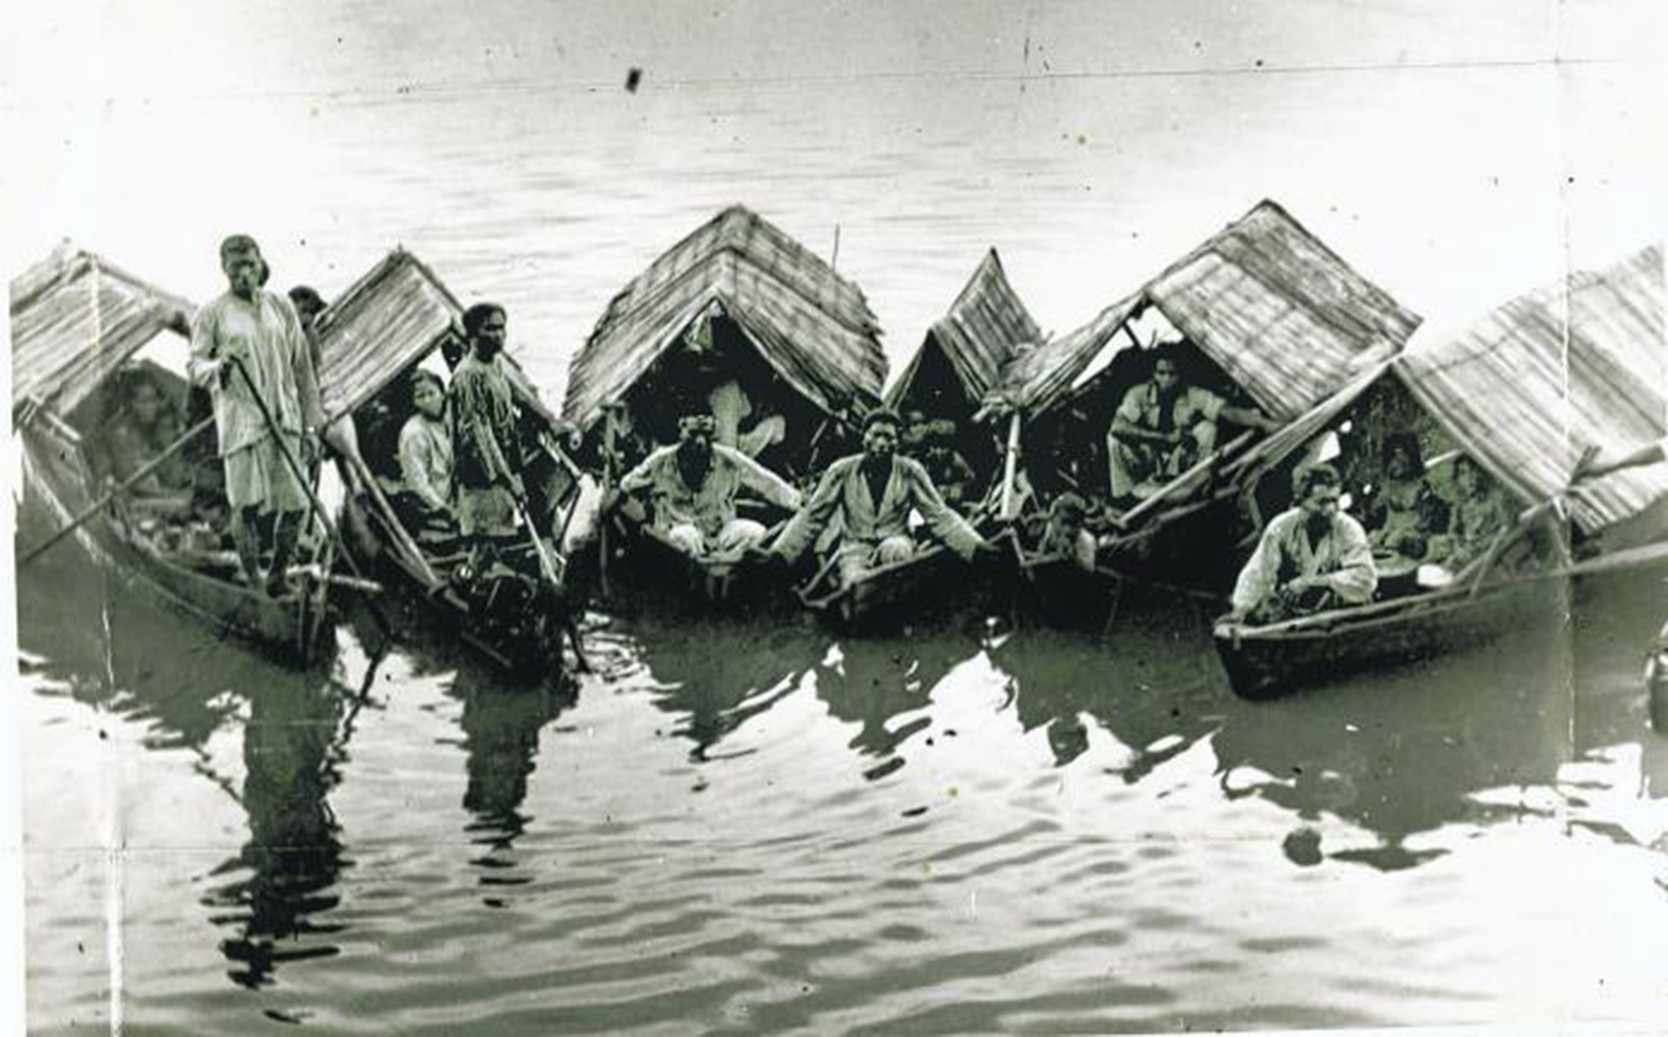 The Orang Laut, or sea people, were alternately loyal subjects of Melaka and Johor, to where Singapore’s original inhabitants fled, and pirates who terrorised merchant ships.